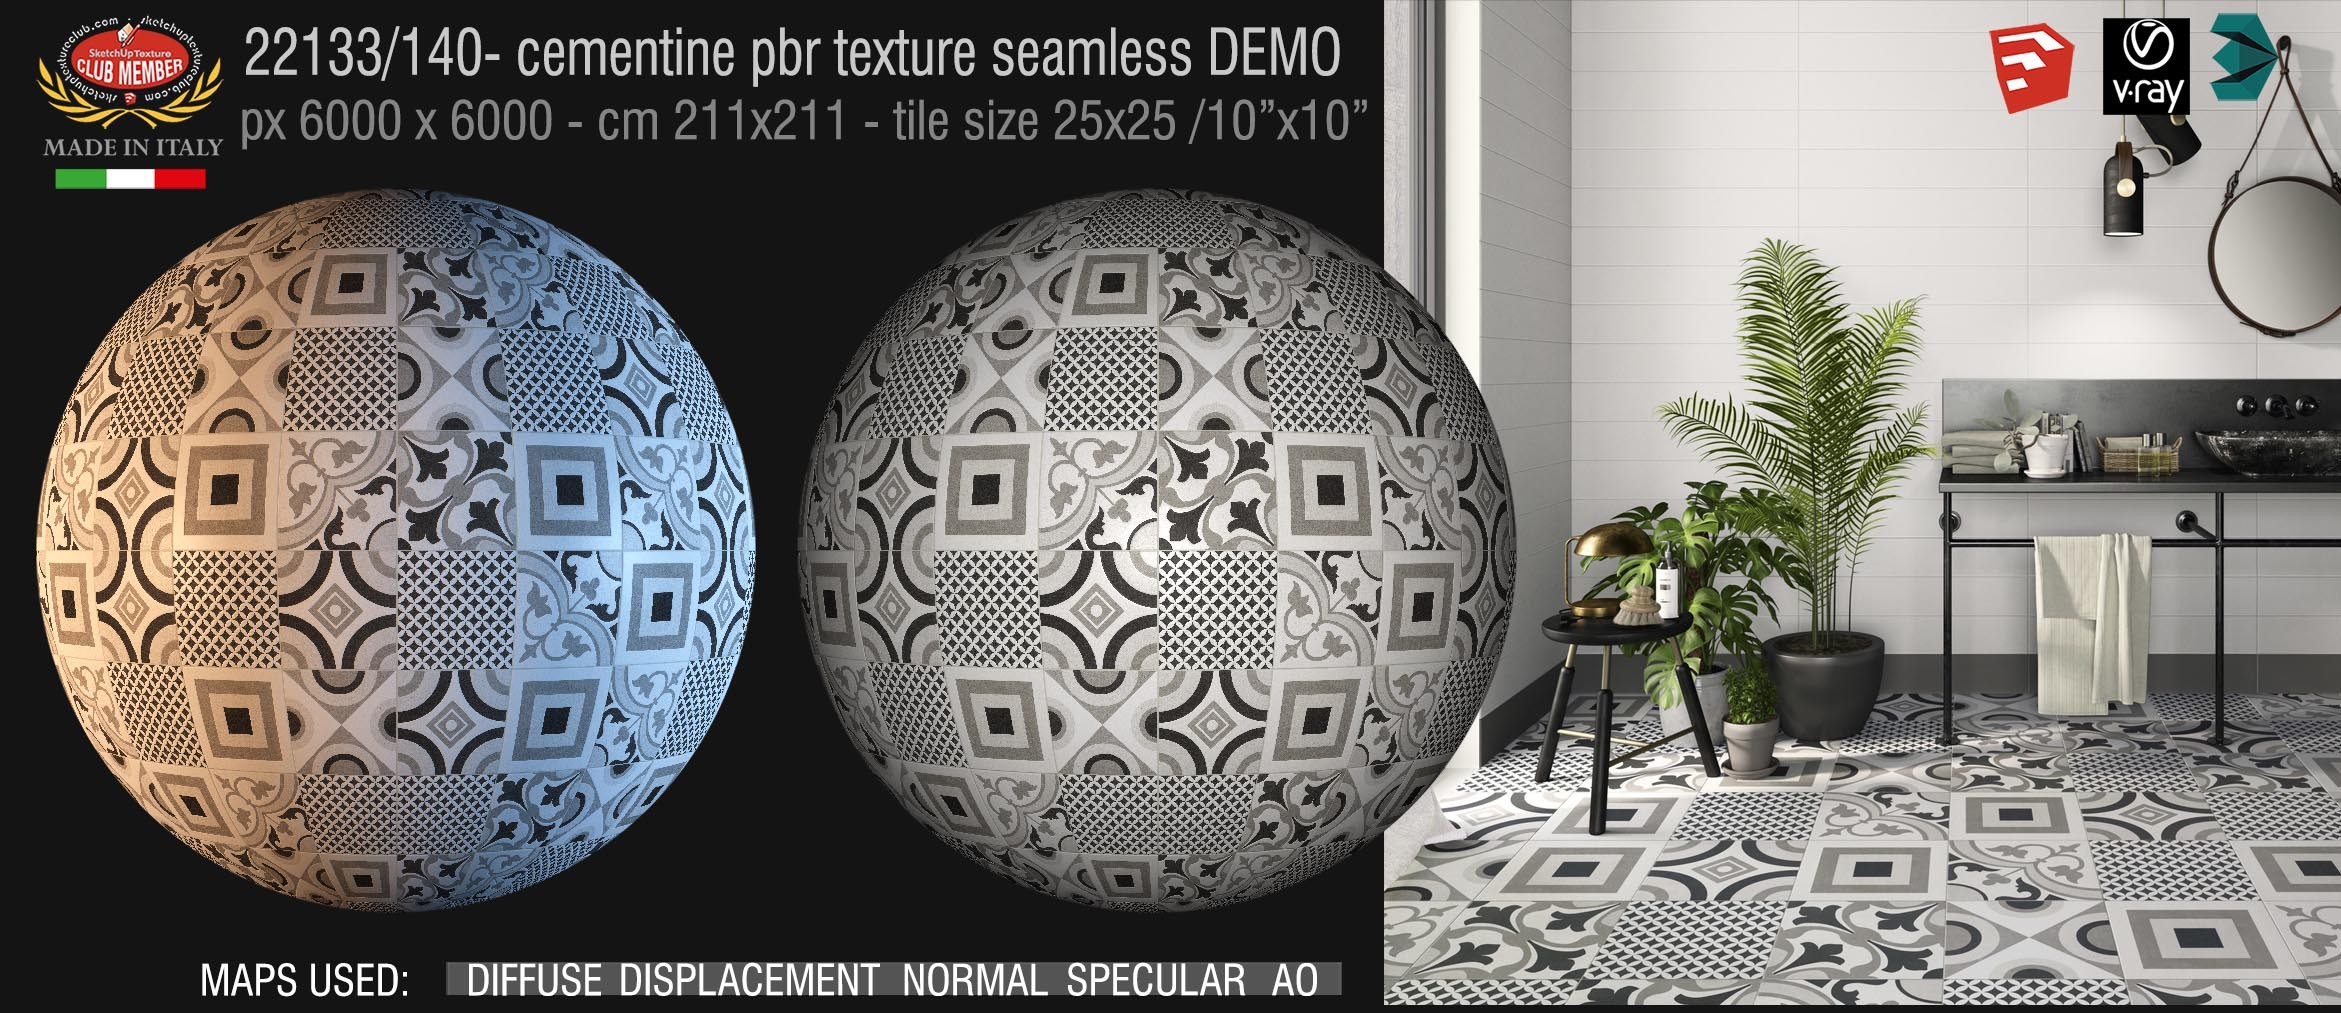 22133/140 cementine tiles Pbr seamless texture DEMO - porcelain stoneware concrete look